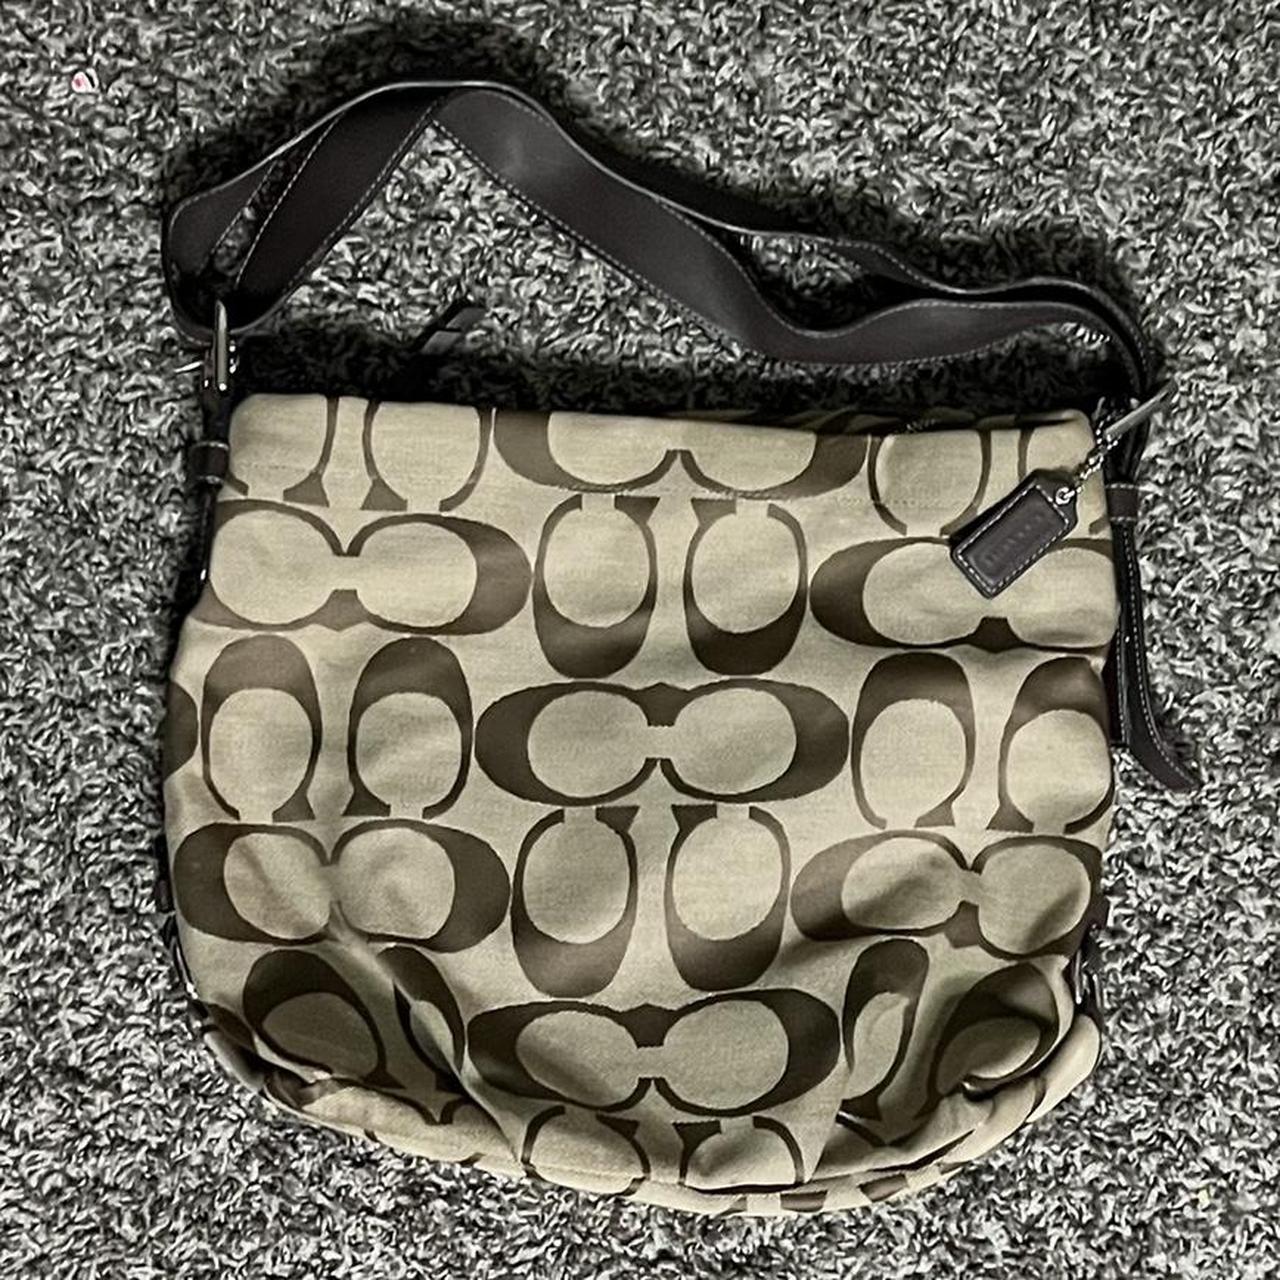 🌟VINTAGE🌟CLASSIC COACH satchel handbag matching - Depop